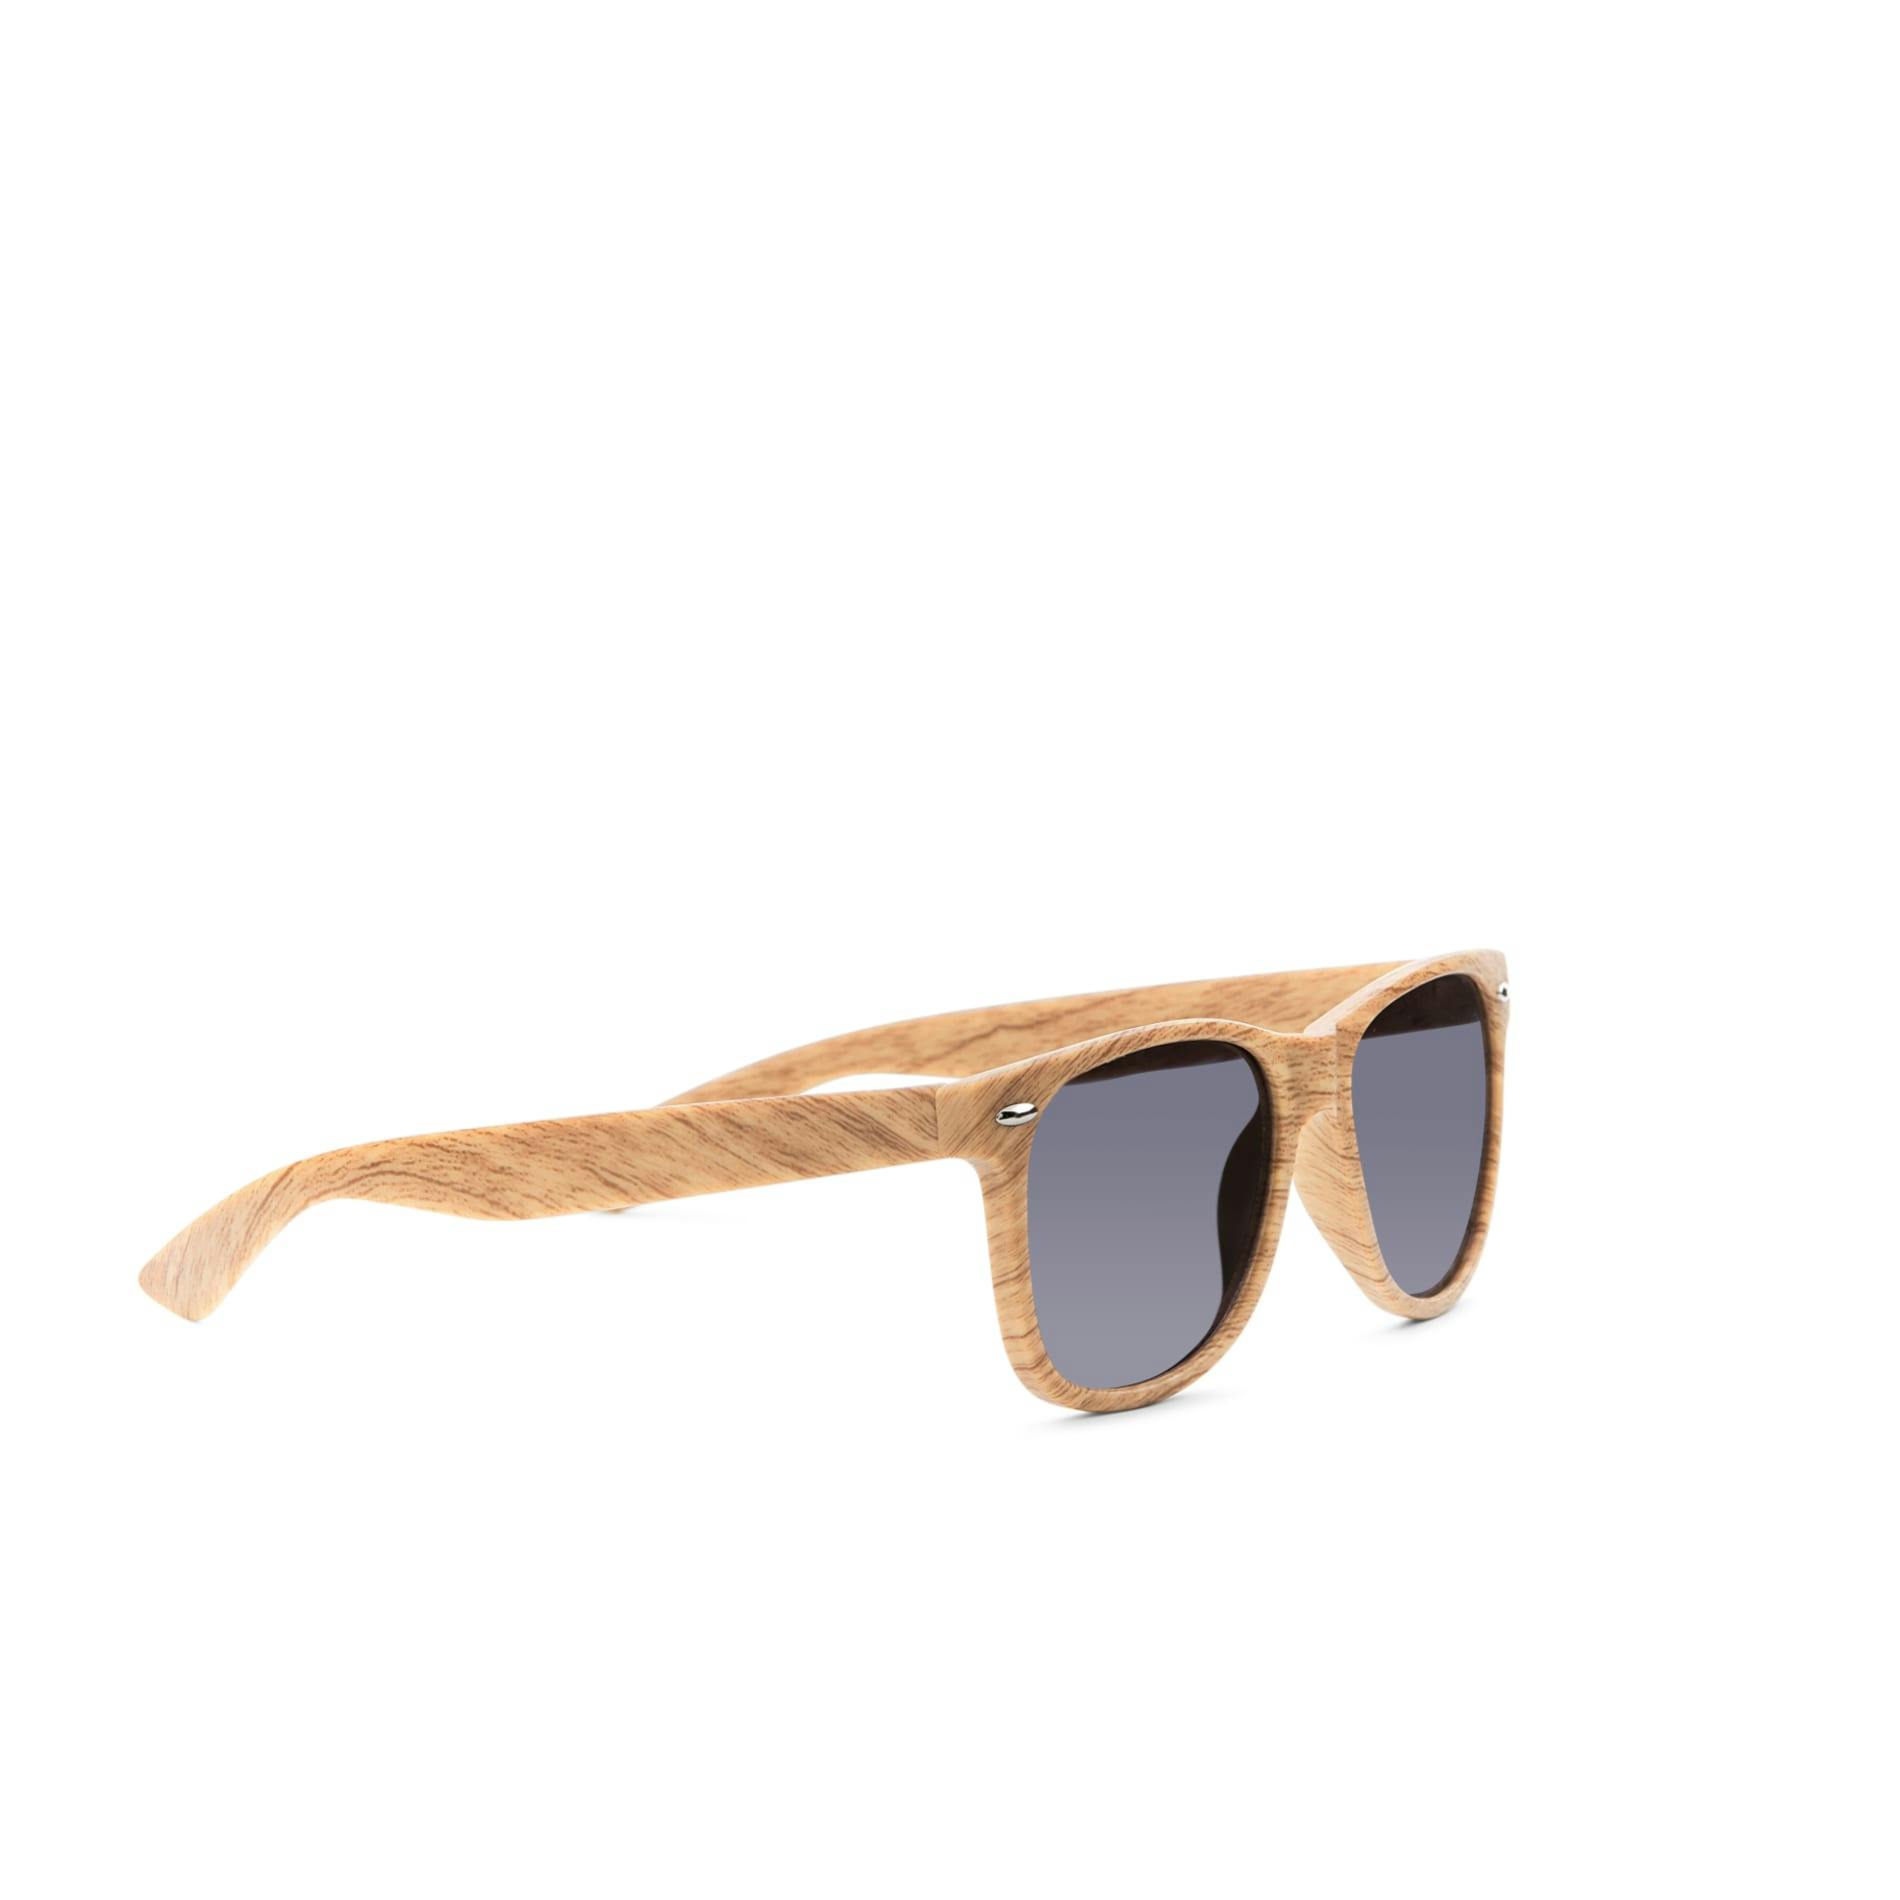 Allen Sunglasses - additional Image 2